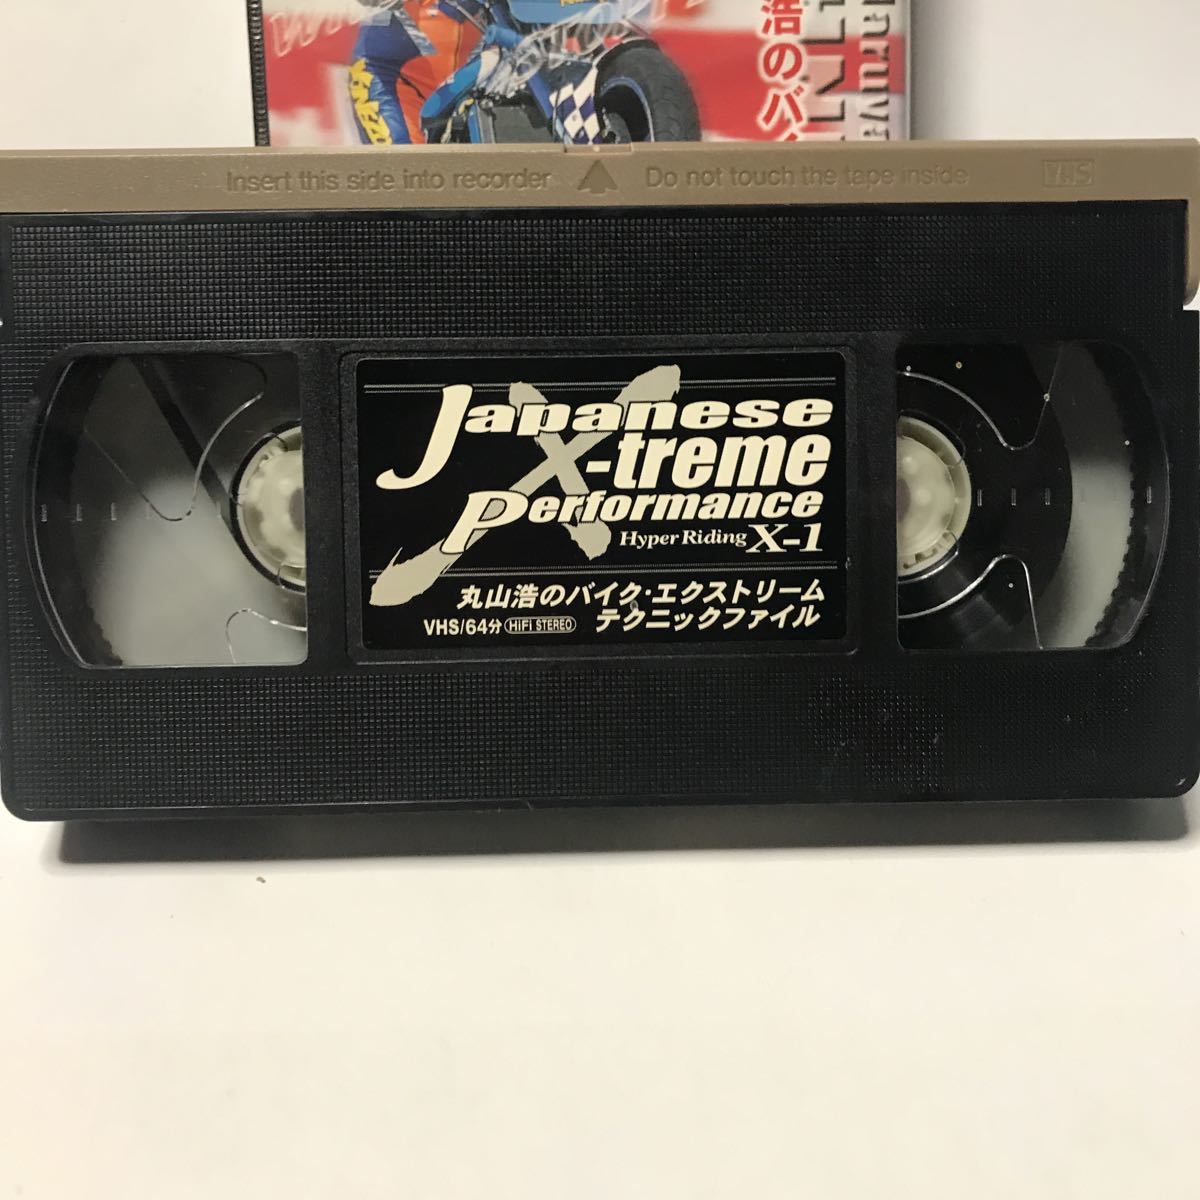  Maruyama .. мотоцикл * Extreme technique файл x-treme VHS видеолента воспроизведение не проверено 